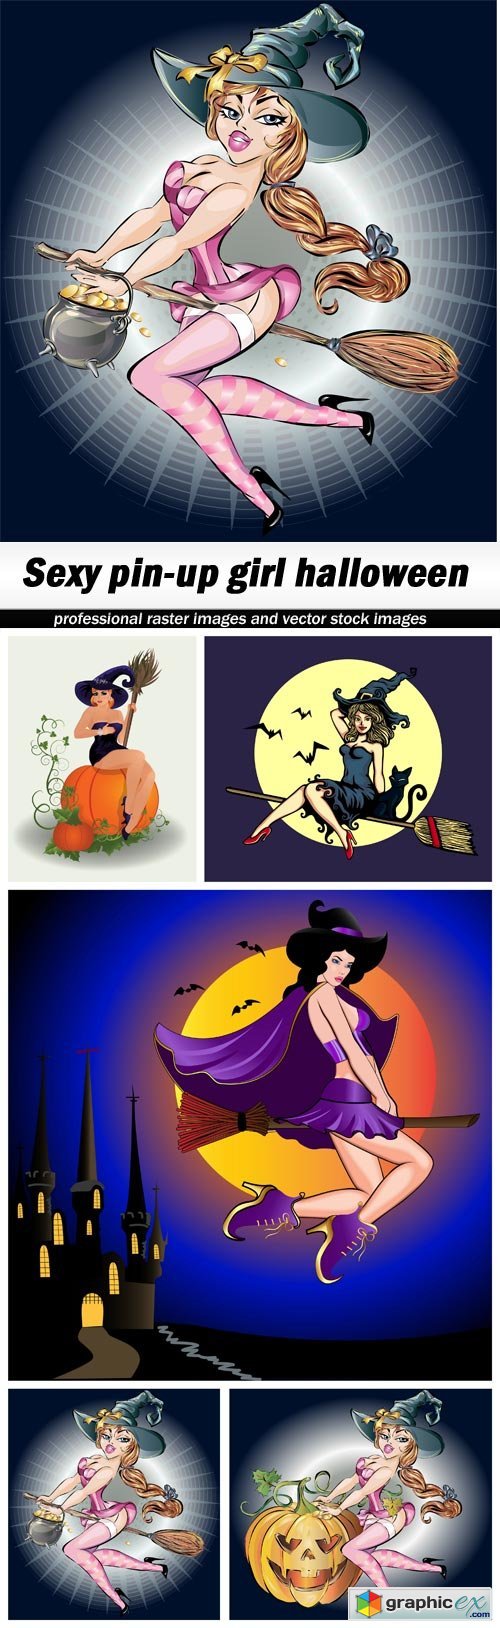 Sexy pin-up girl halloween - 5 EPS